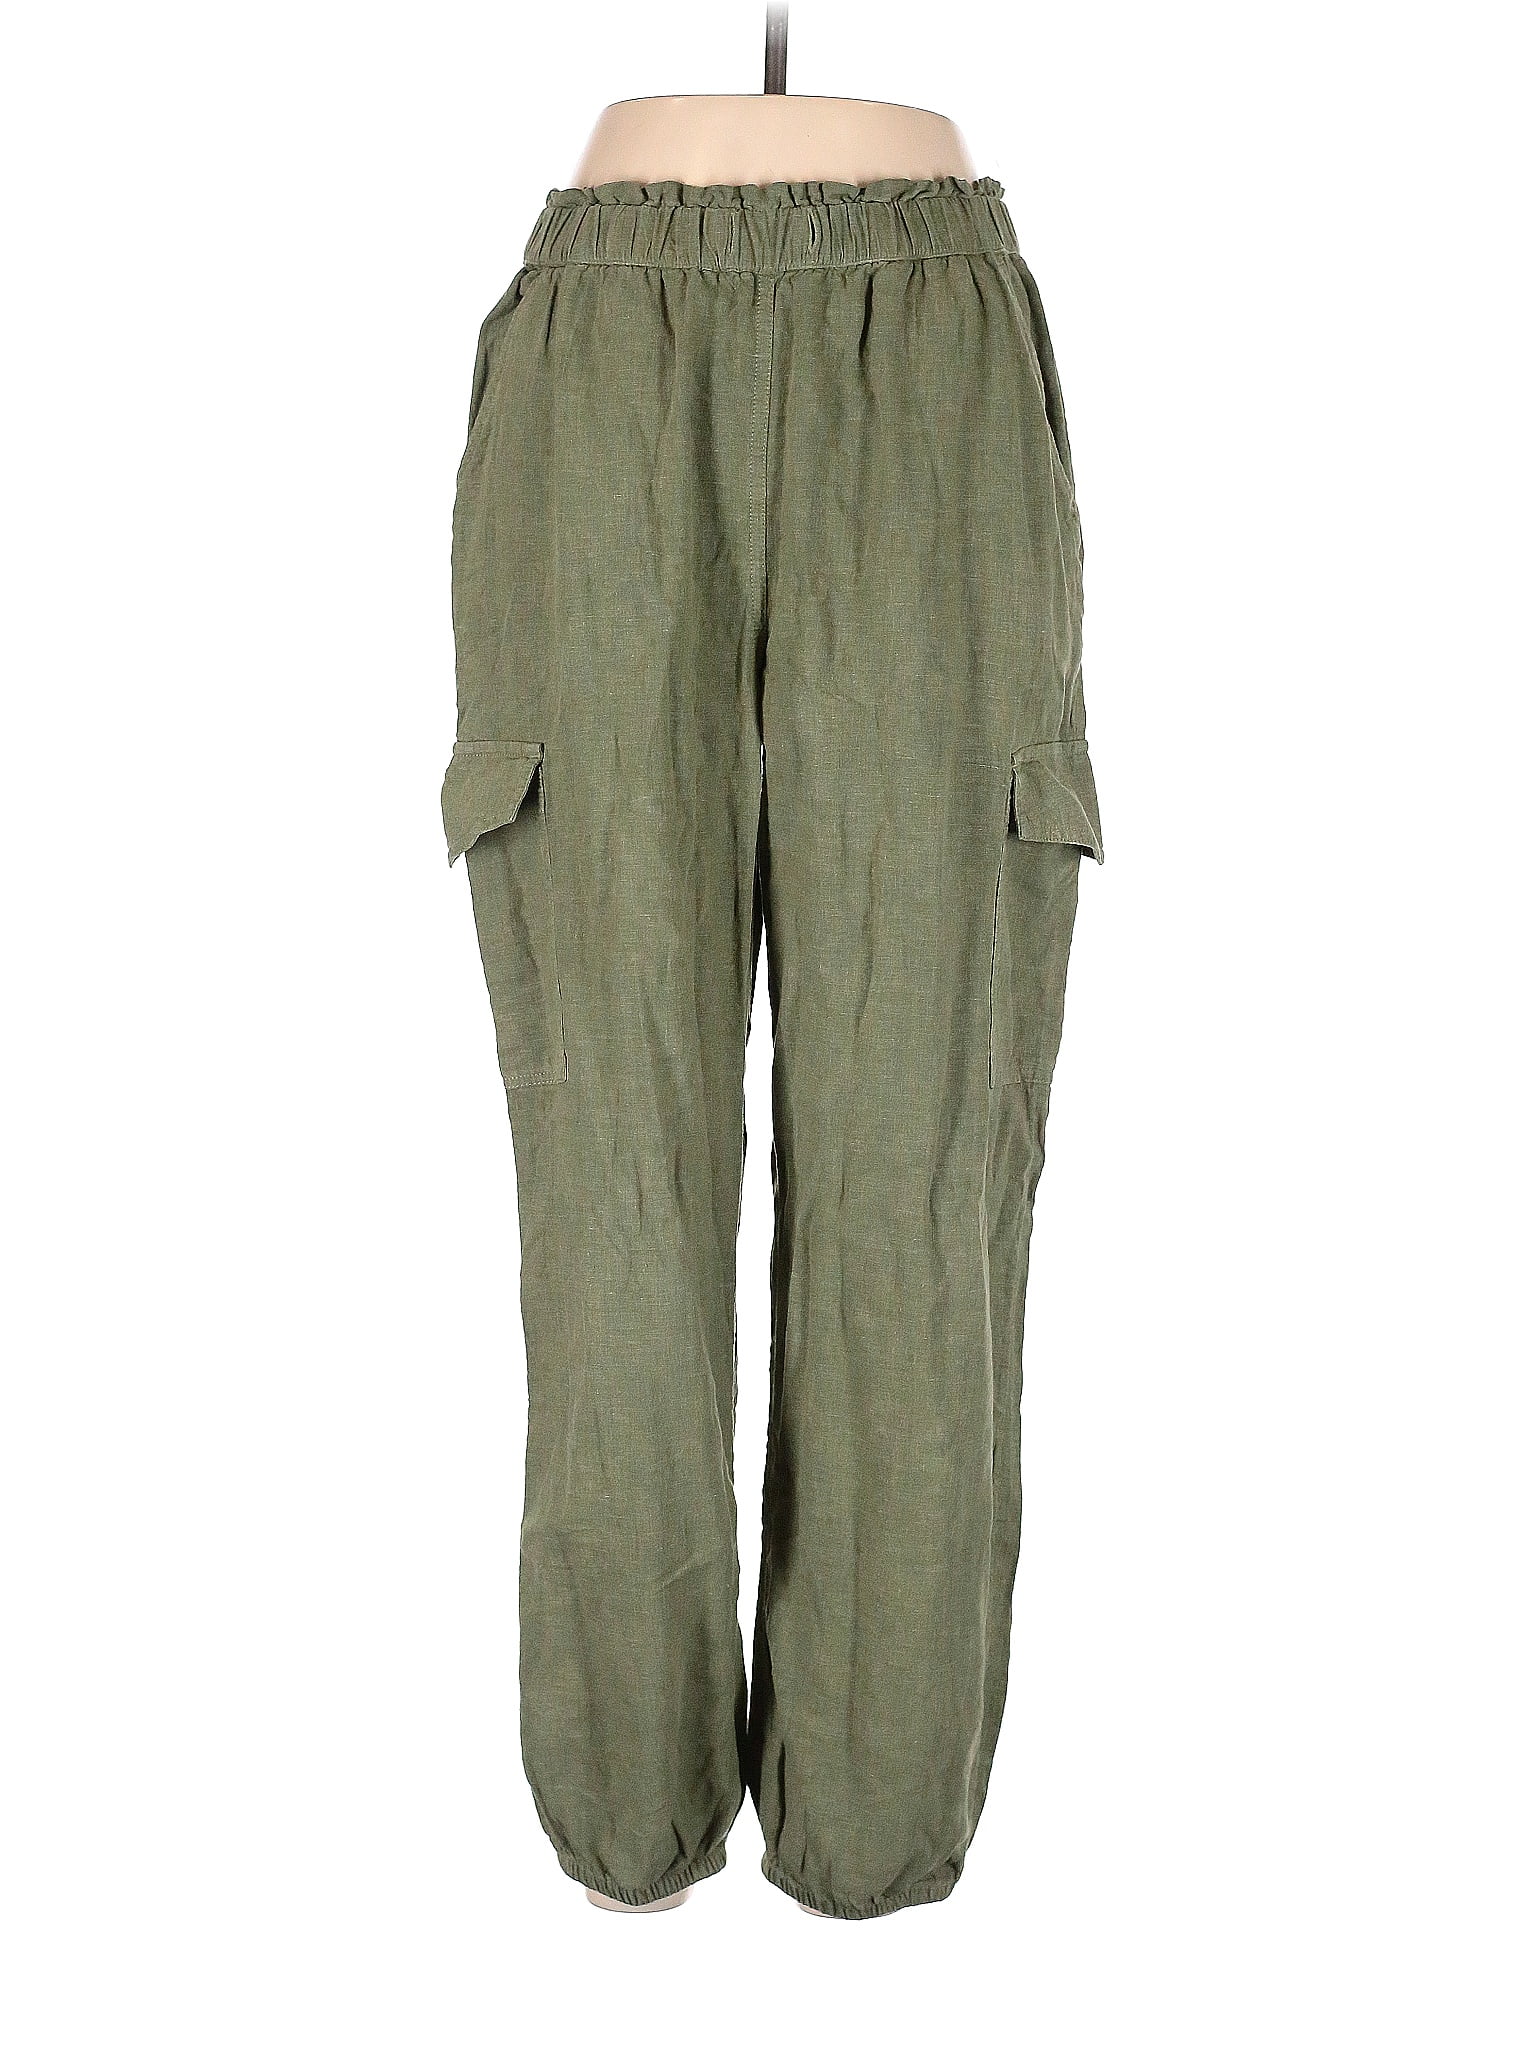 Aerie Green Leggings Size L - 62% off  Green leggings, Aerie leggings,  Clothes